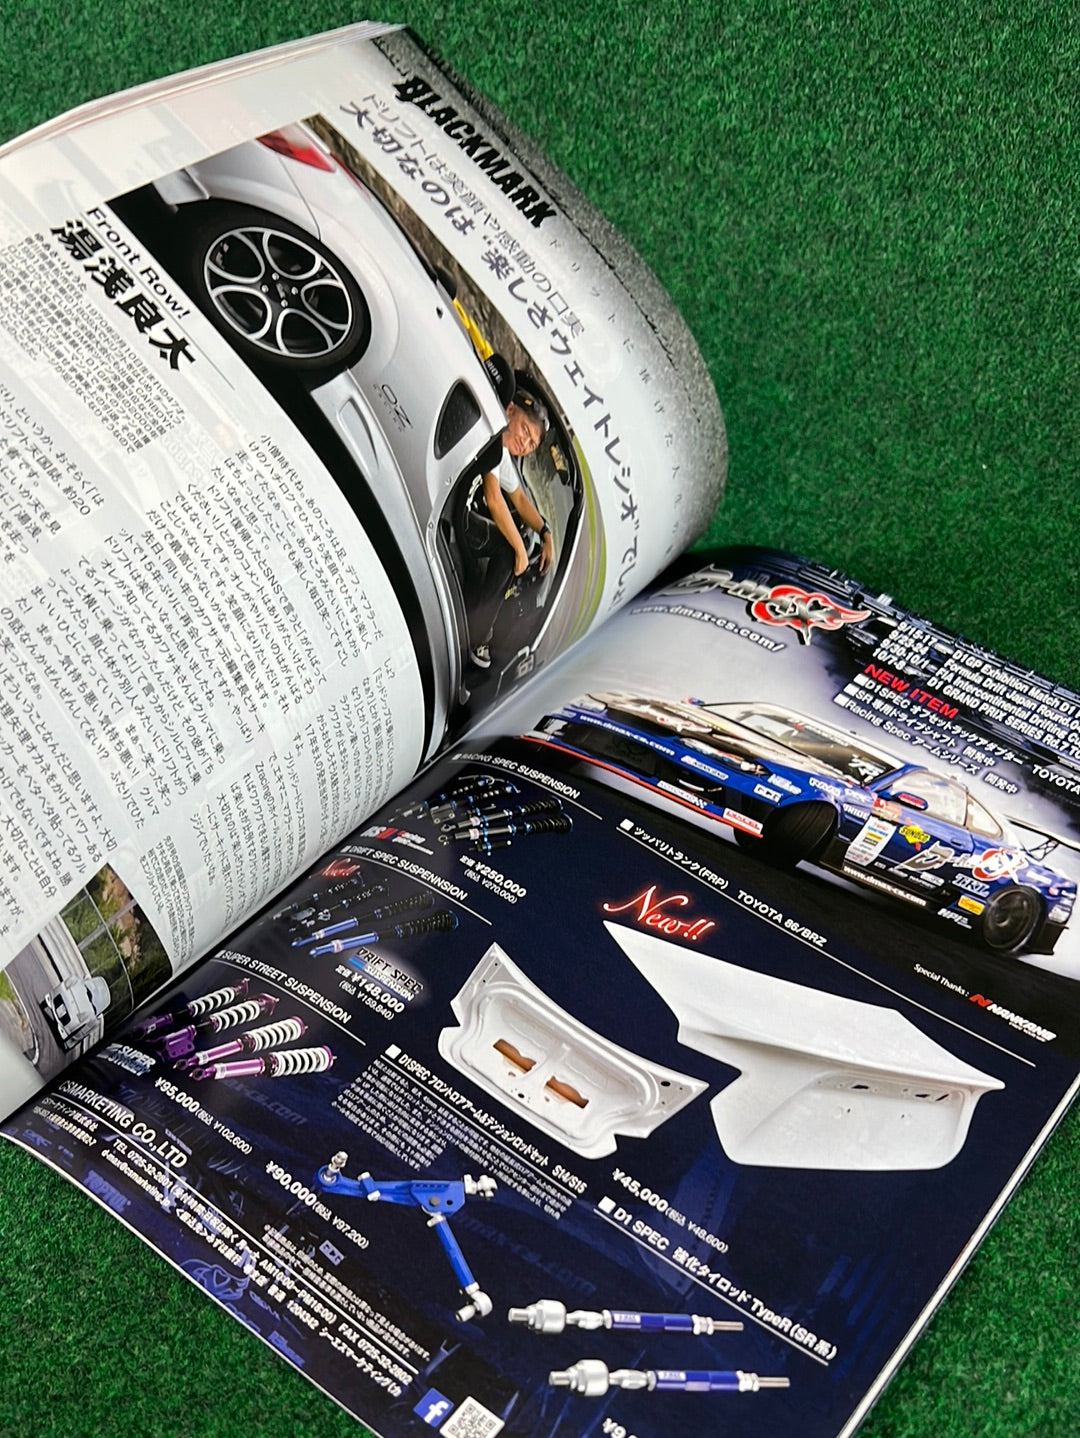 Drift Tengoku Magazine - October 2017